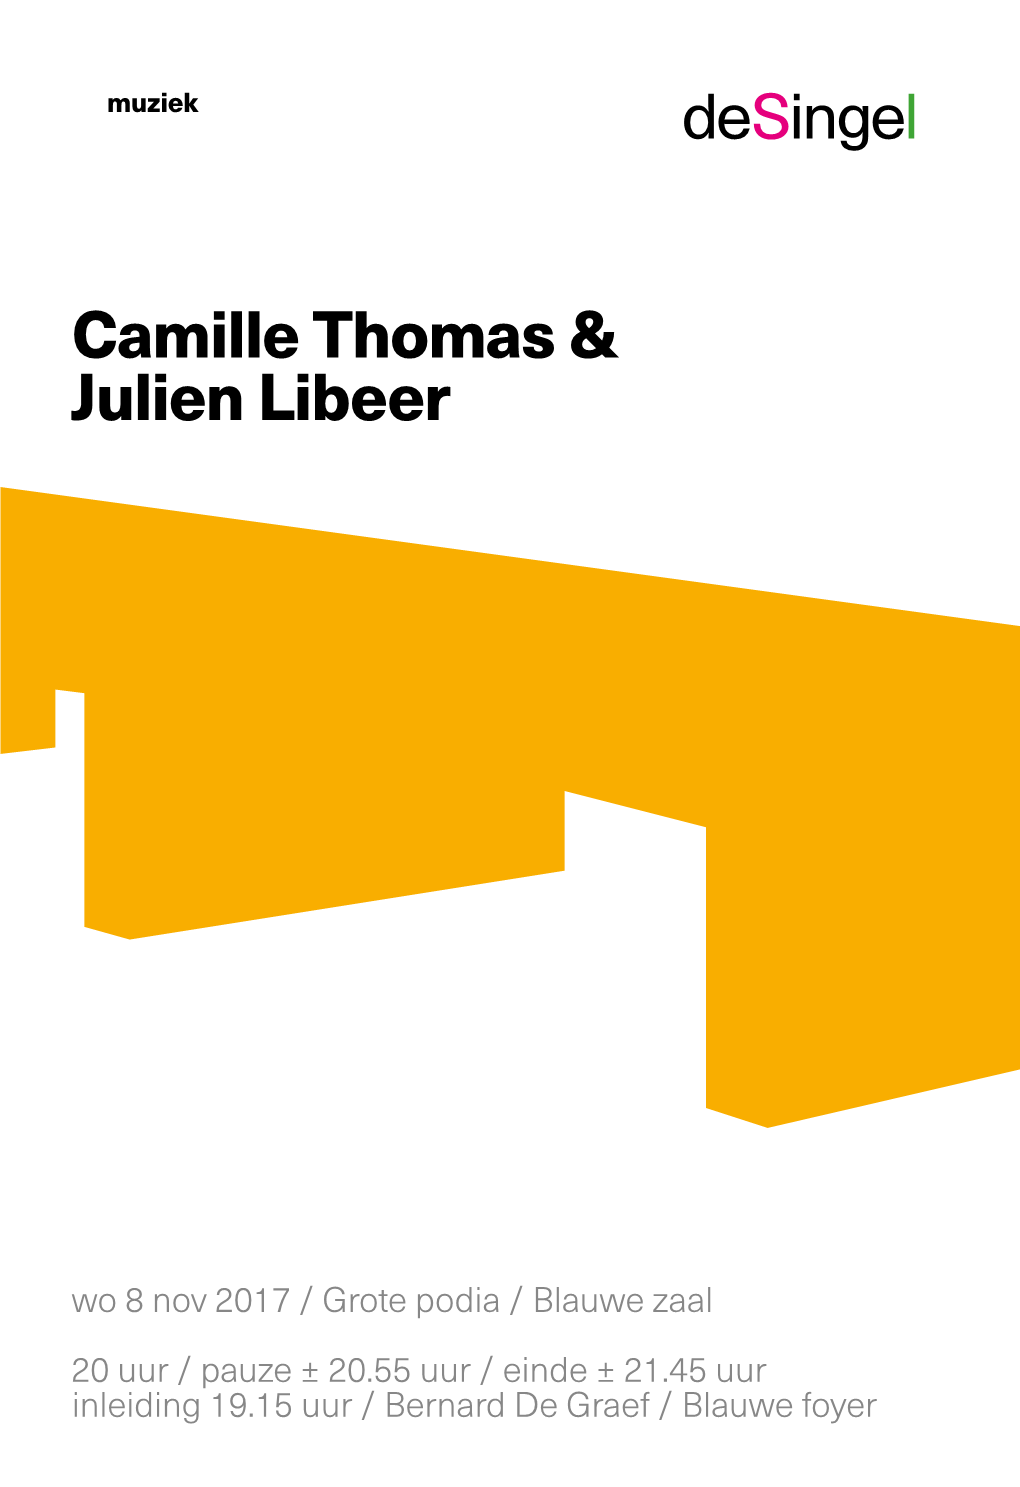 Camille Thomas & Julien Libeer